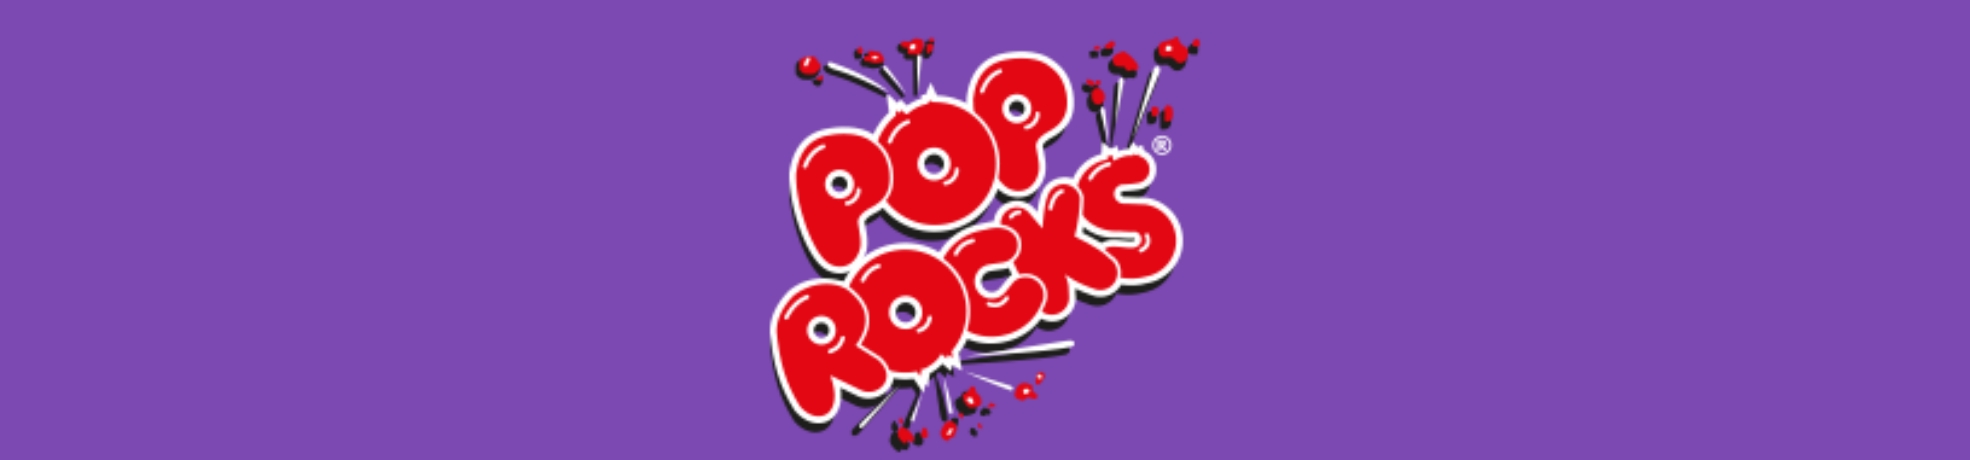 pop rocks logo